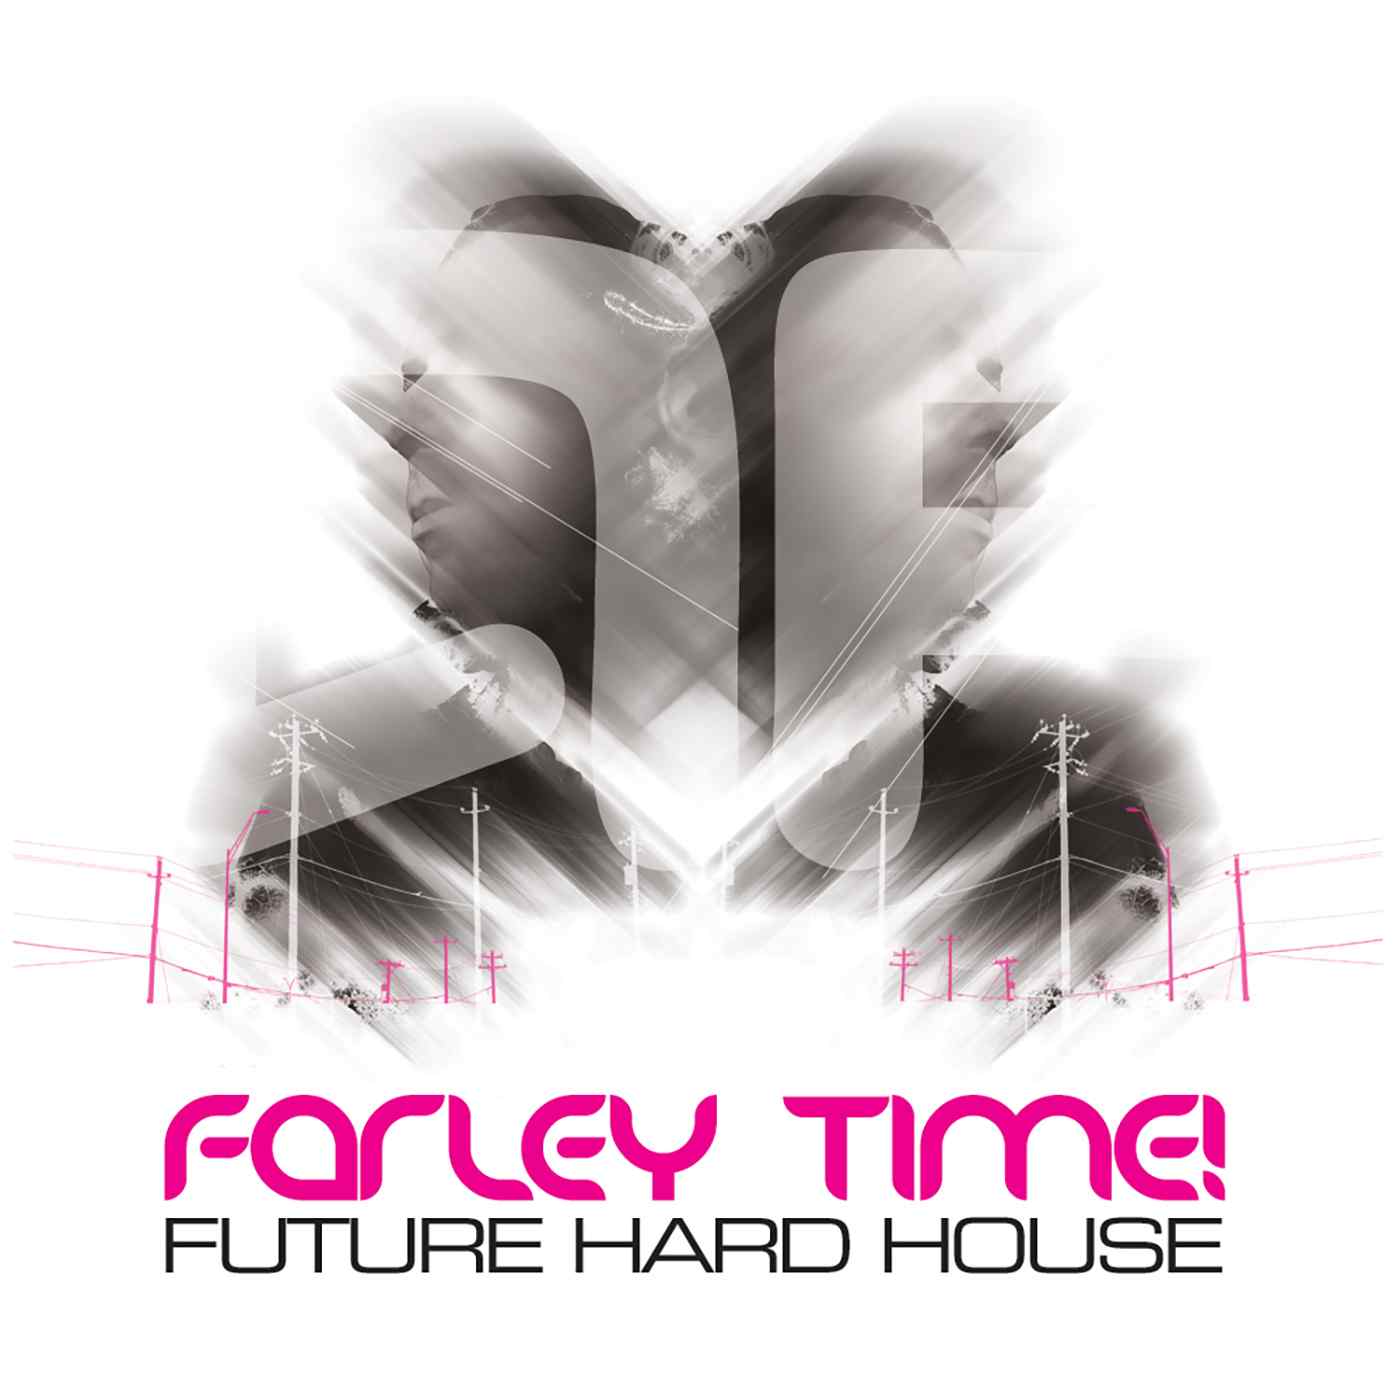 Farleytime - Future Hard House - Andy Farley